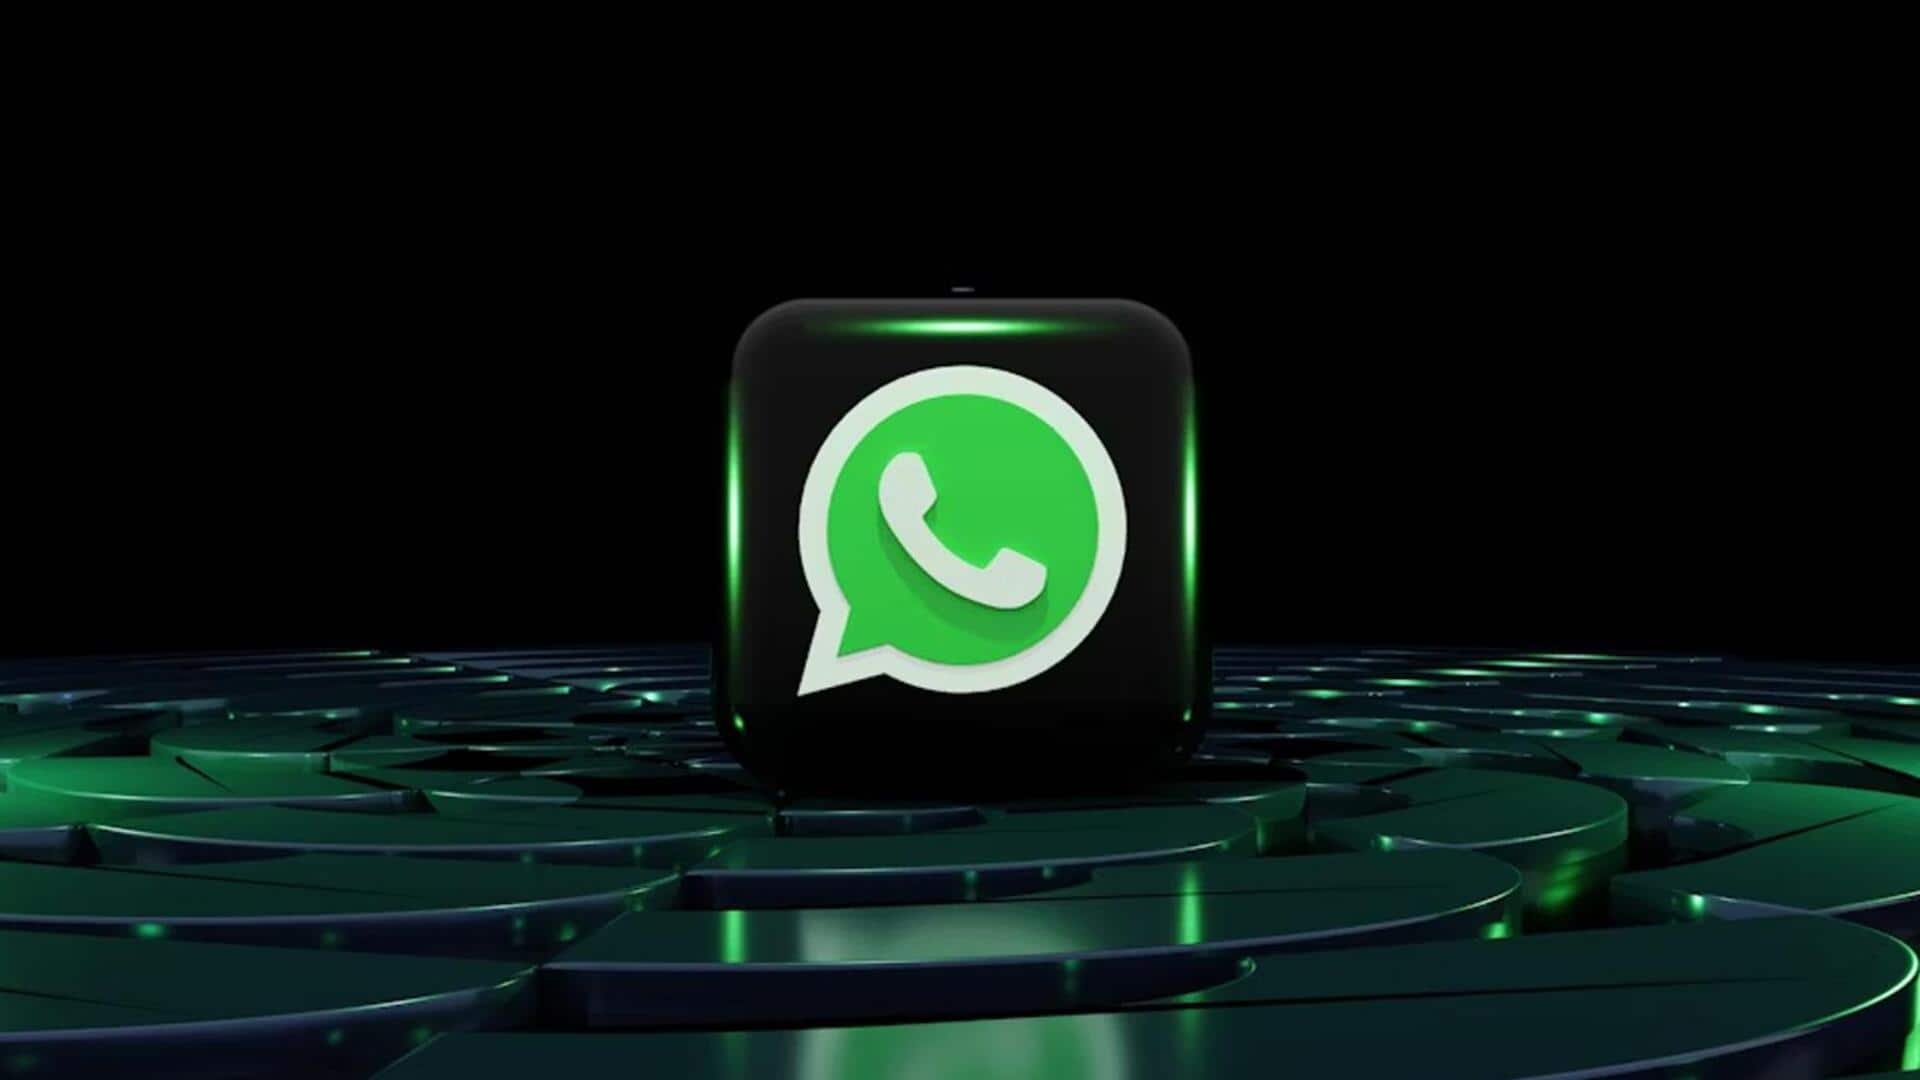 व्हाट्सऐप का नया फीचर: स्टोरी रिएक्शन पर जल्द यूजर्स को मिलेगा नोटिफिकेशन